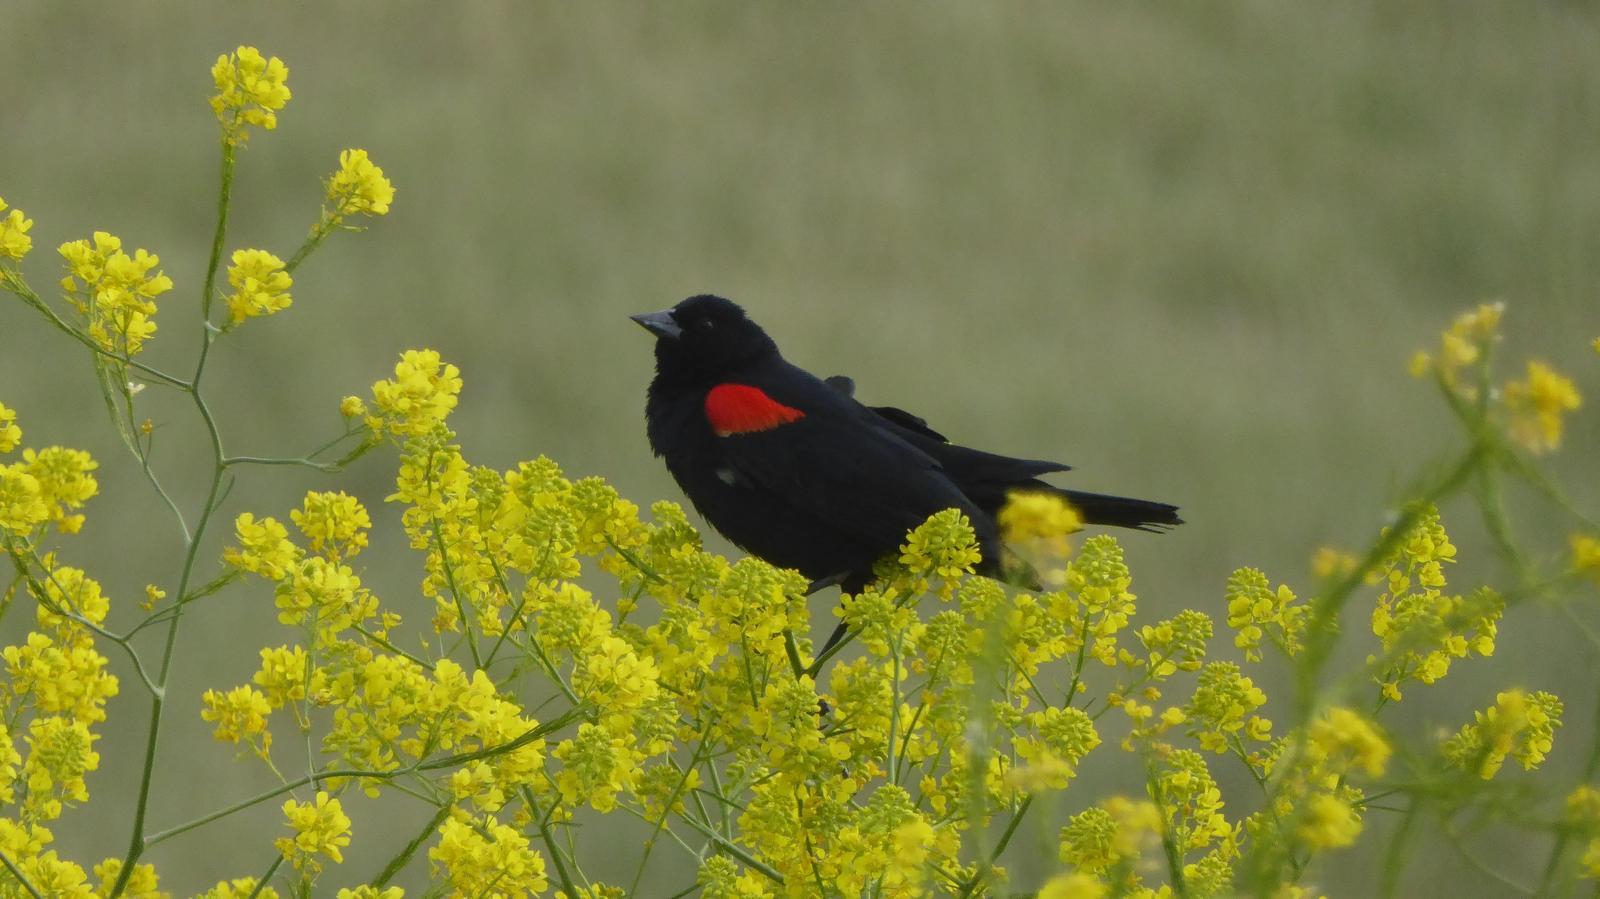 Red-winged Blackbird Photo by Daliel Leite